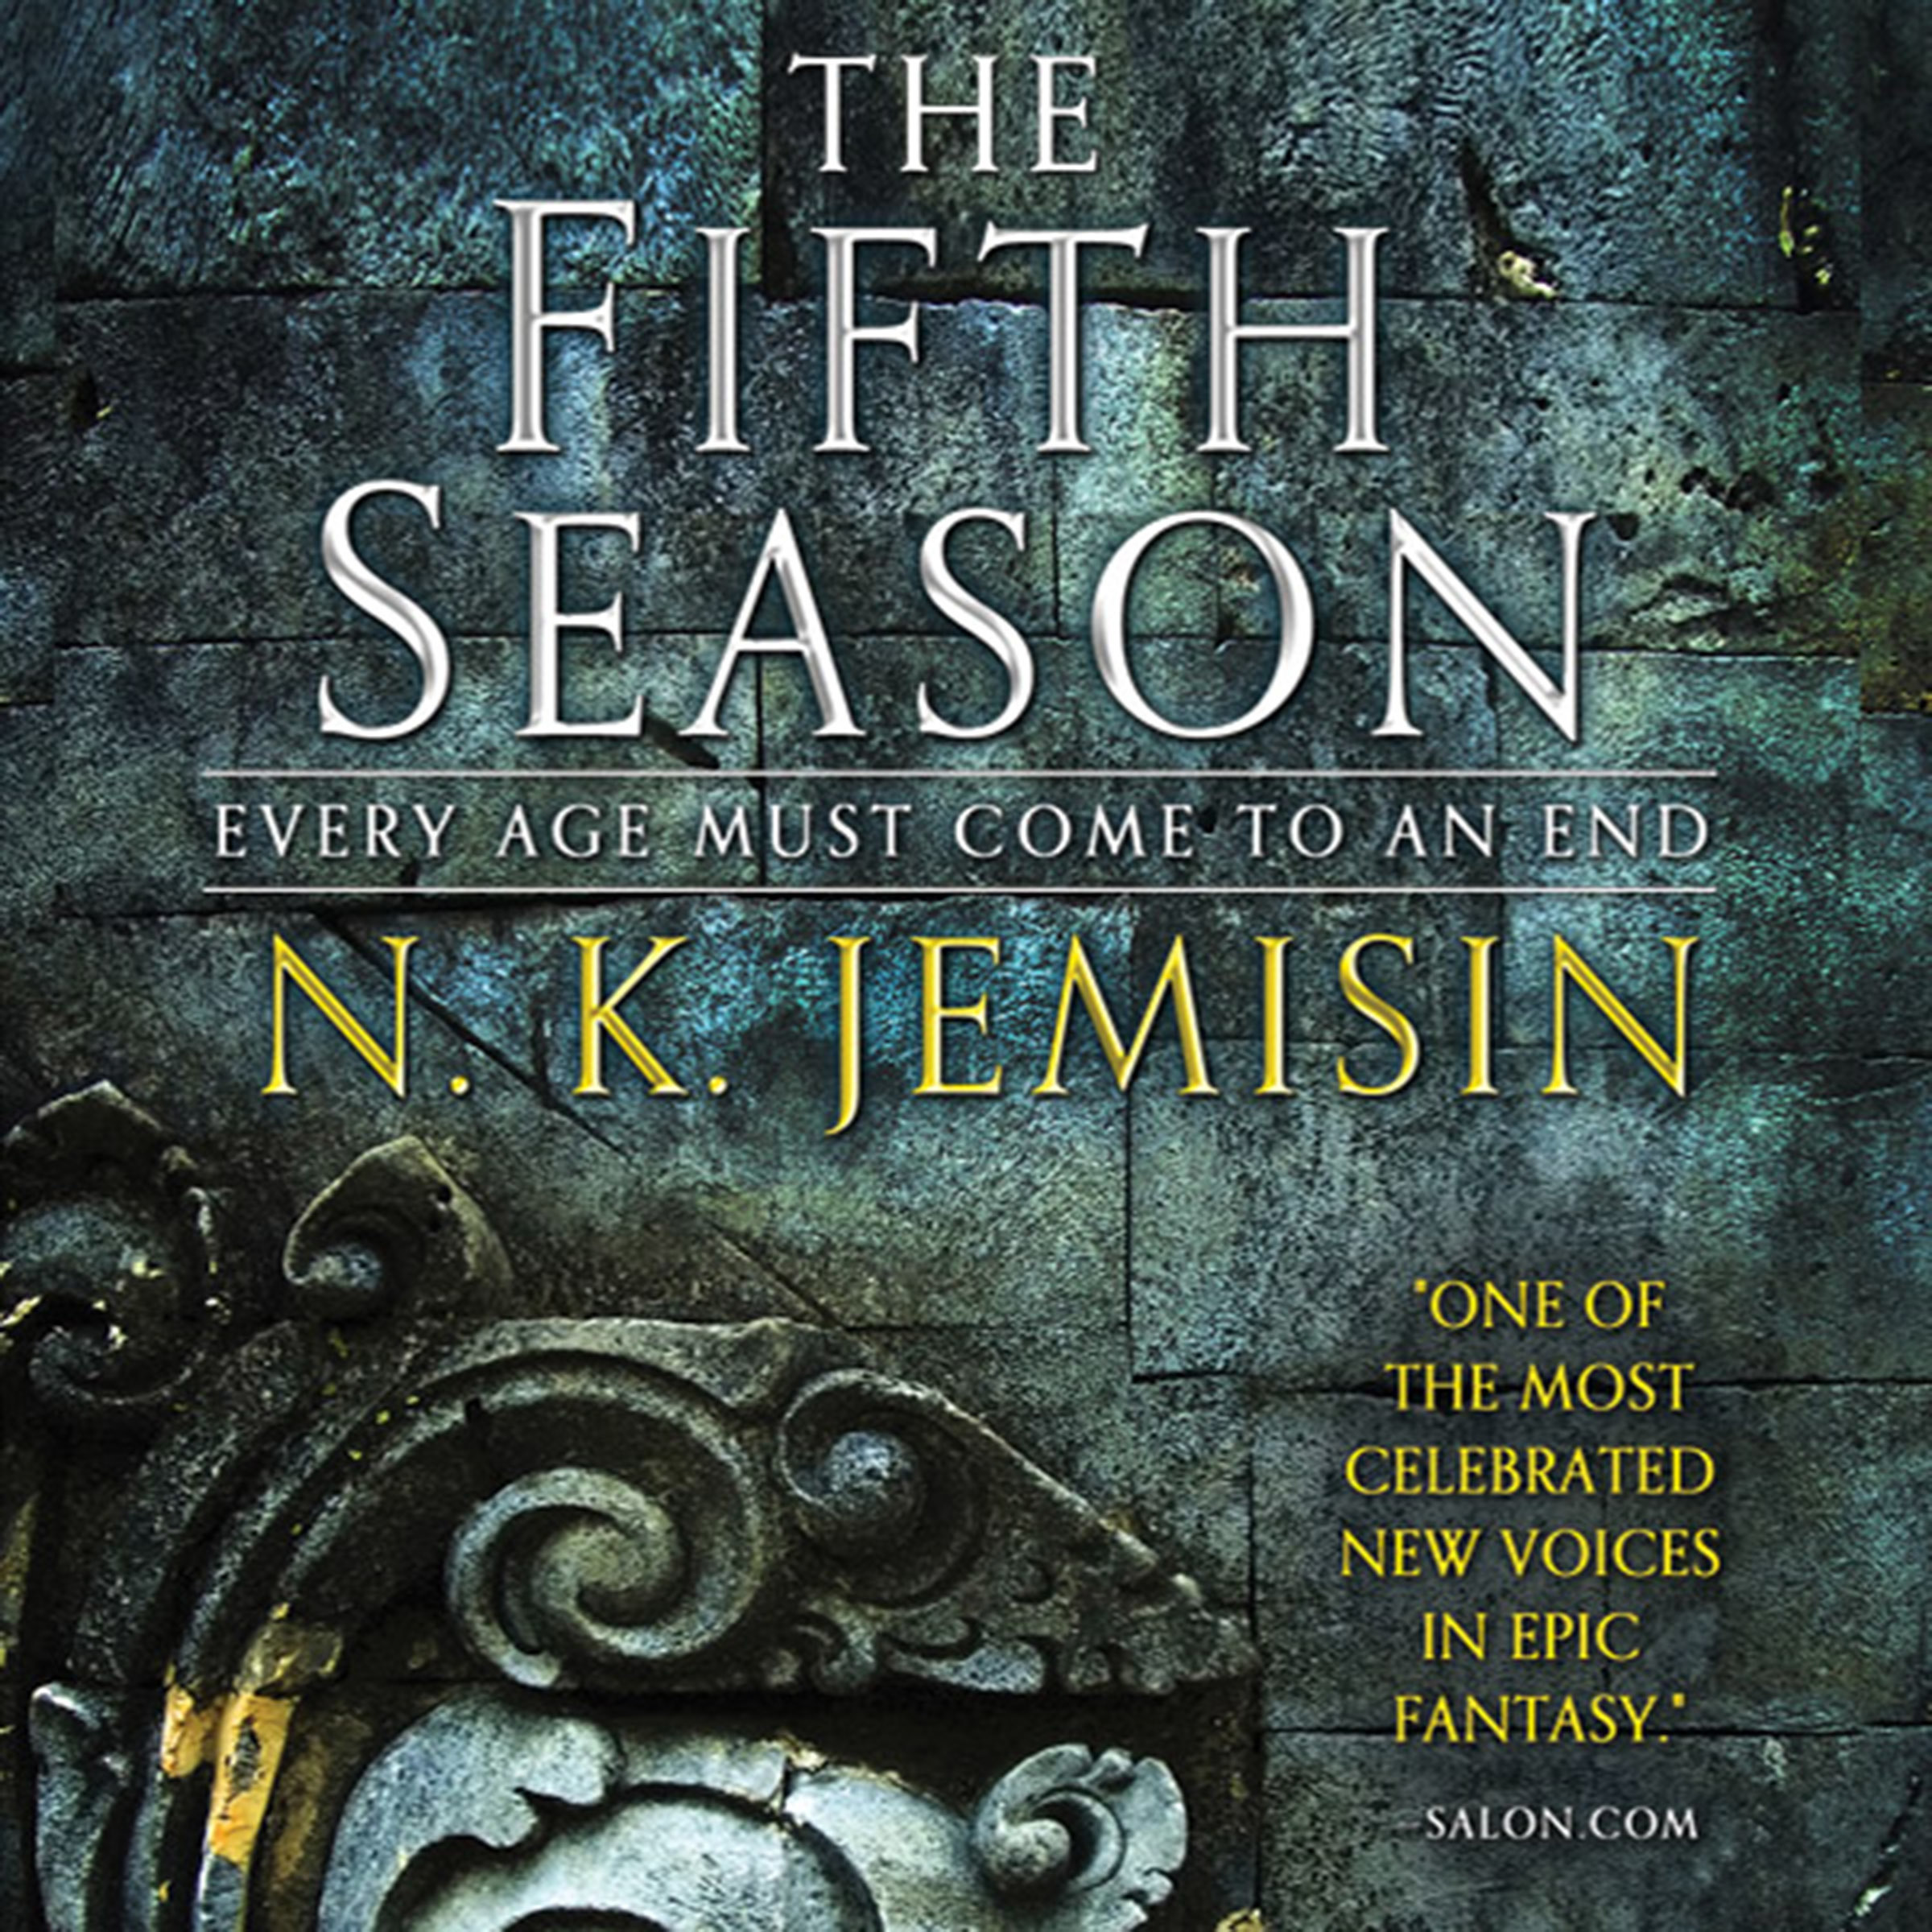 Friday Reads: The Fifth Season by N. K. Jemisin